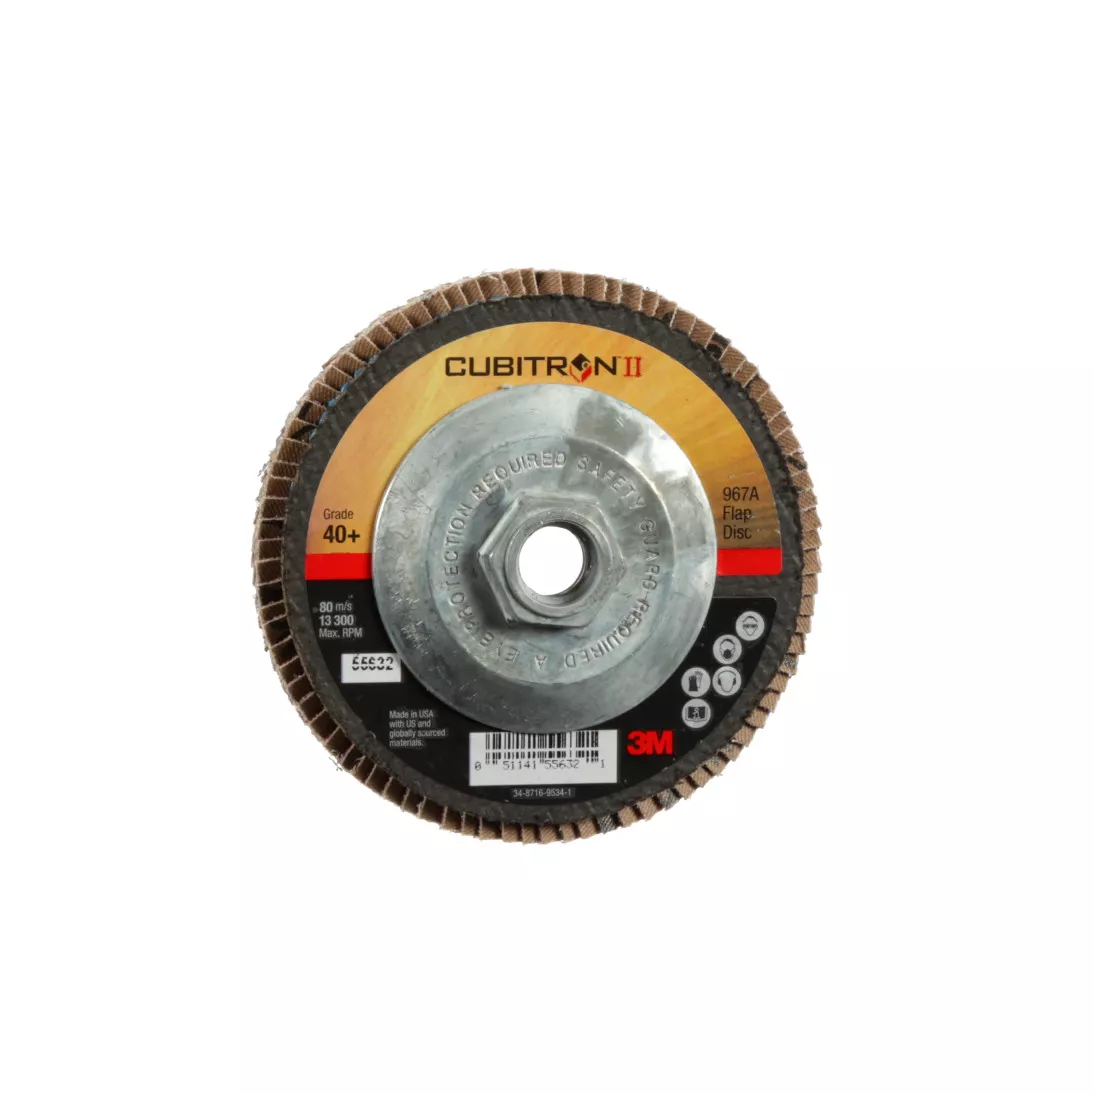 3M™ Cubitron™ II Flap Disc 967A, 40+, T27 Quick Change, 4-1/2 in x
5/8